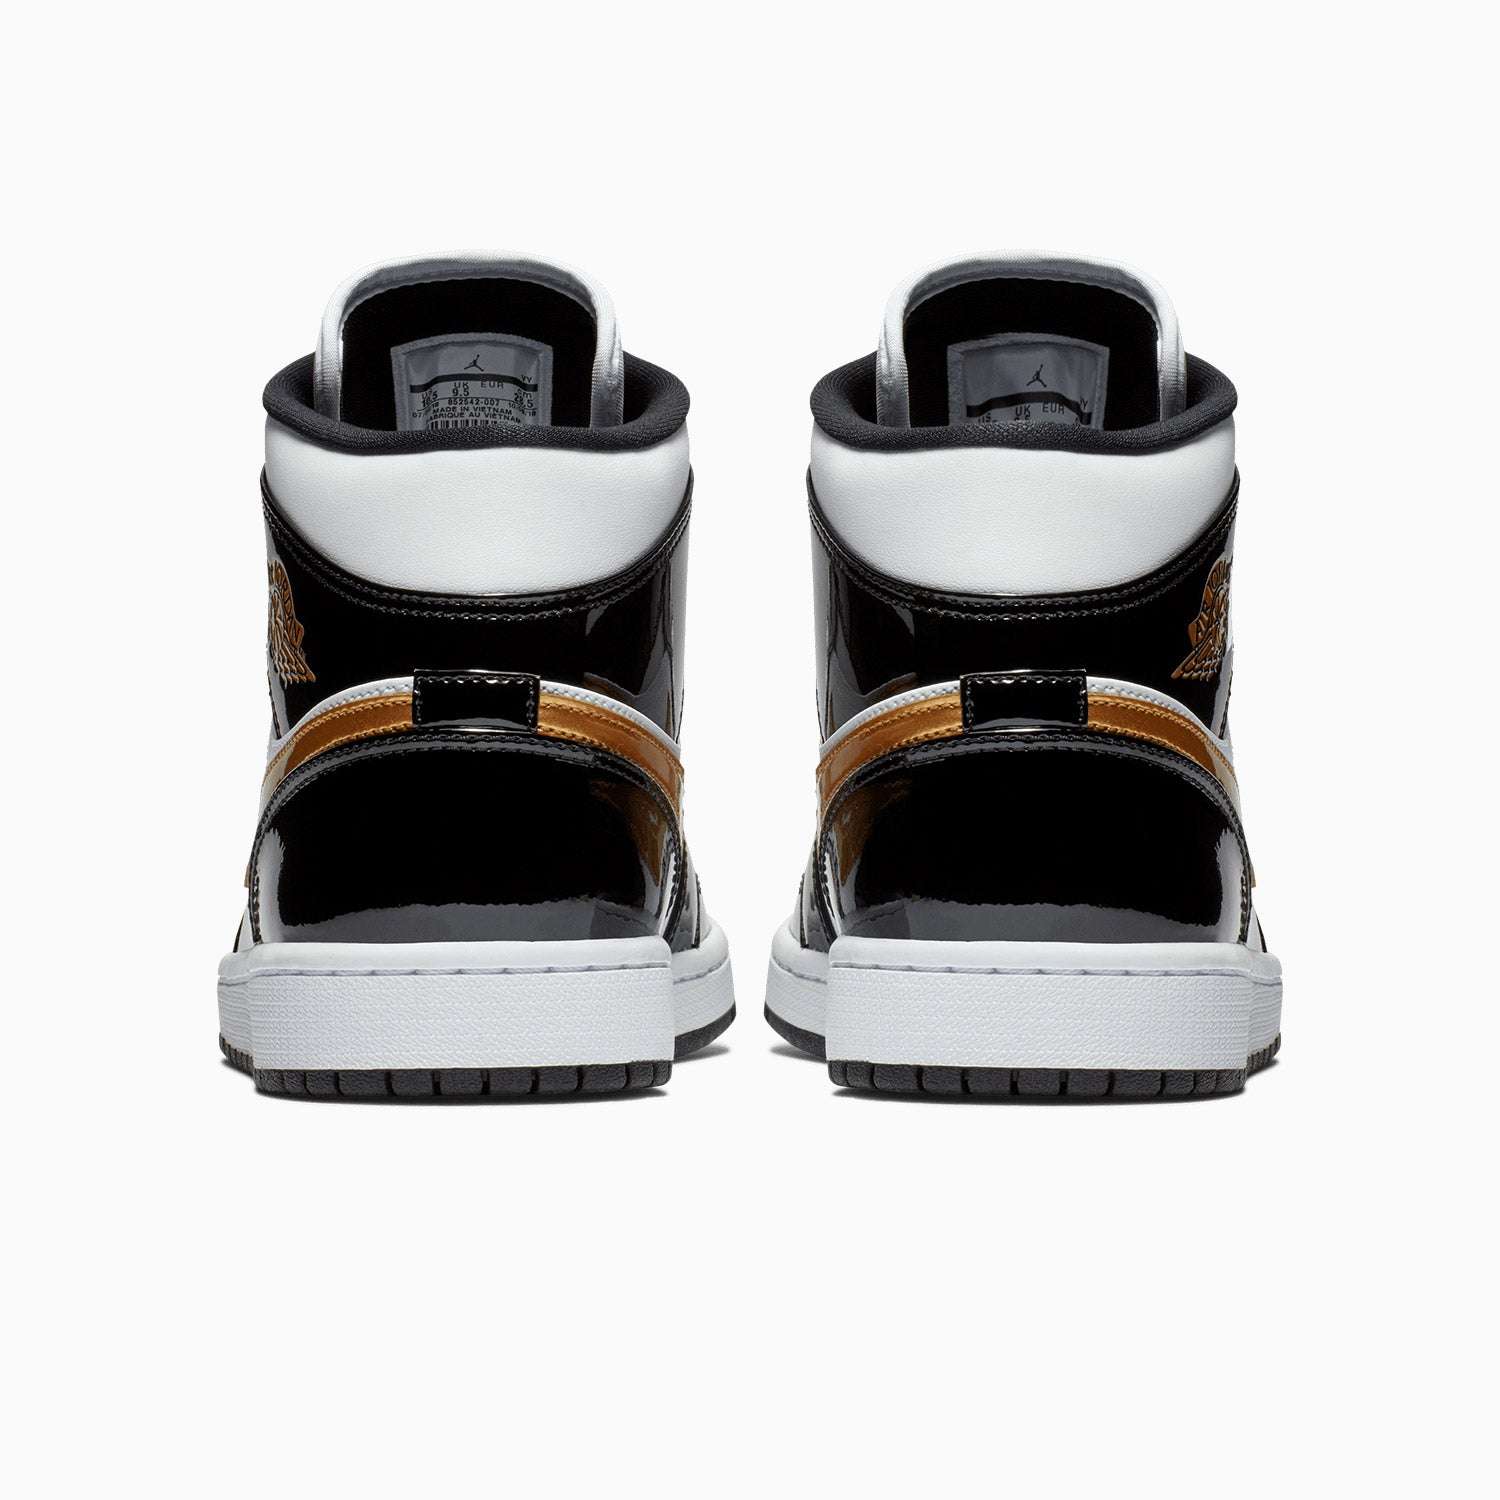 mens-air-jordan-1-mid-se-black-gold-shoes-852542-007